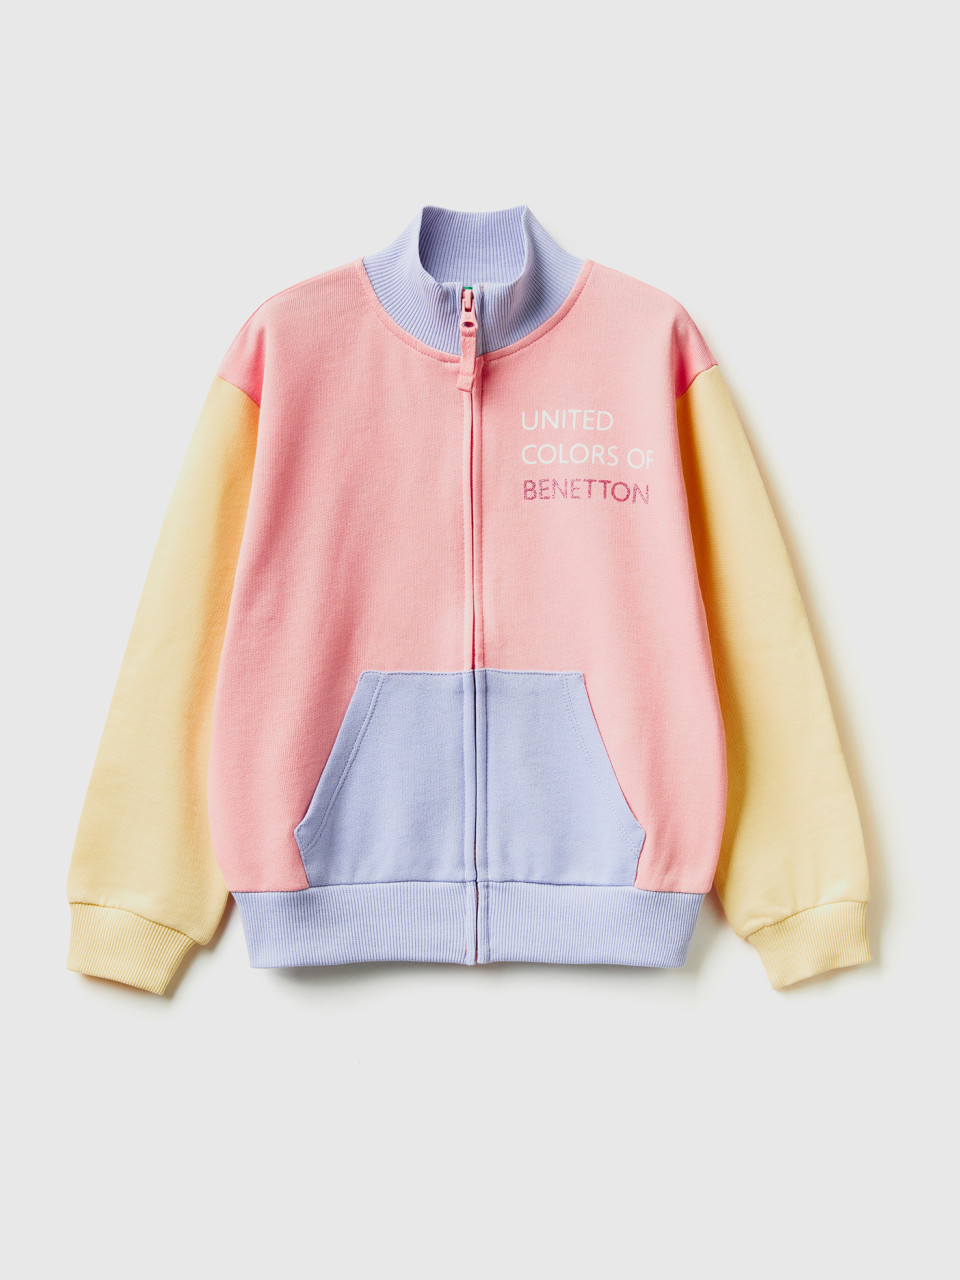 Benetton, Sweatshirt With Zip And Collar, Multi-color, Kids